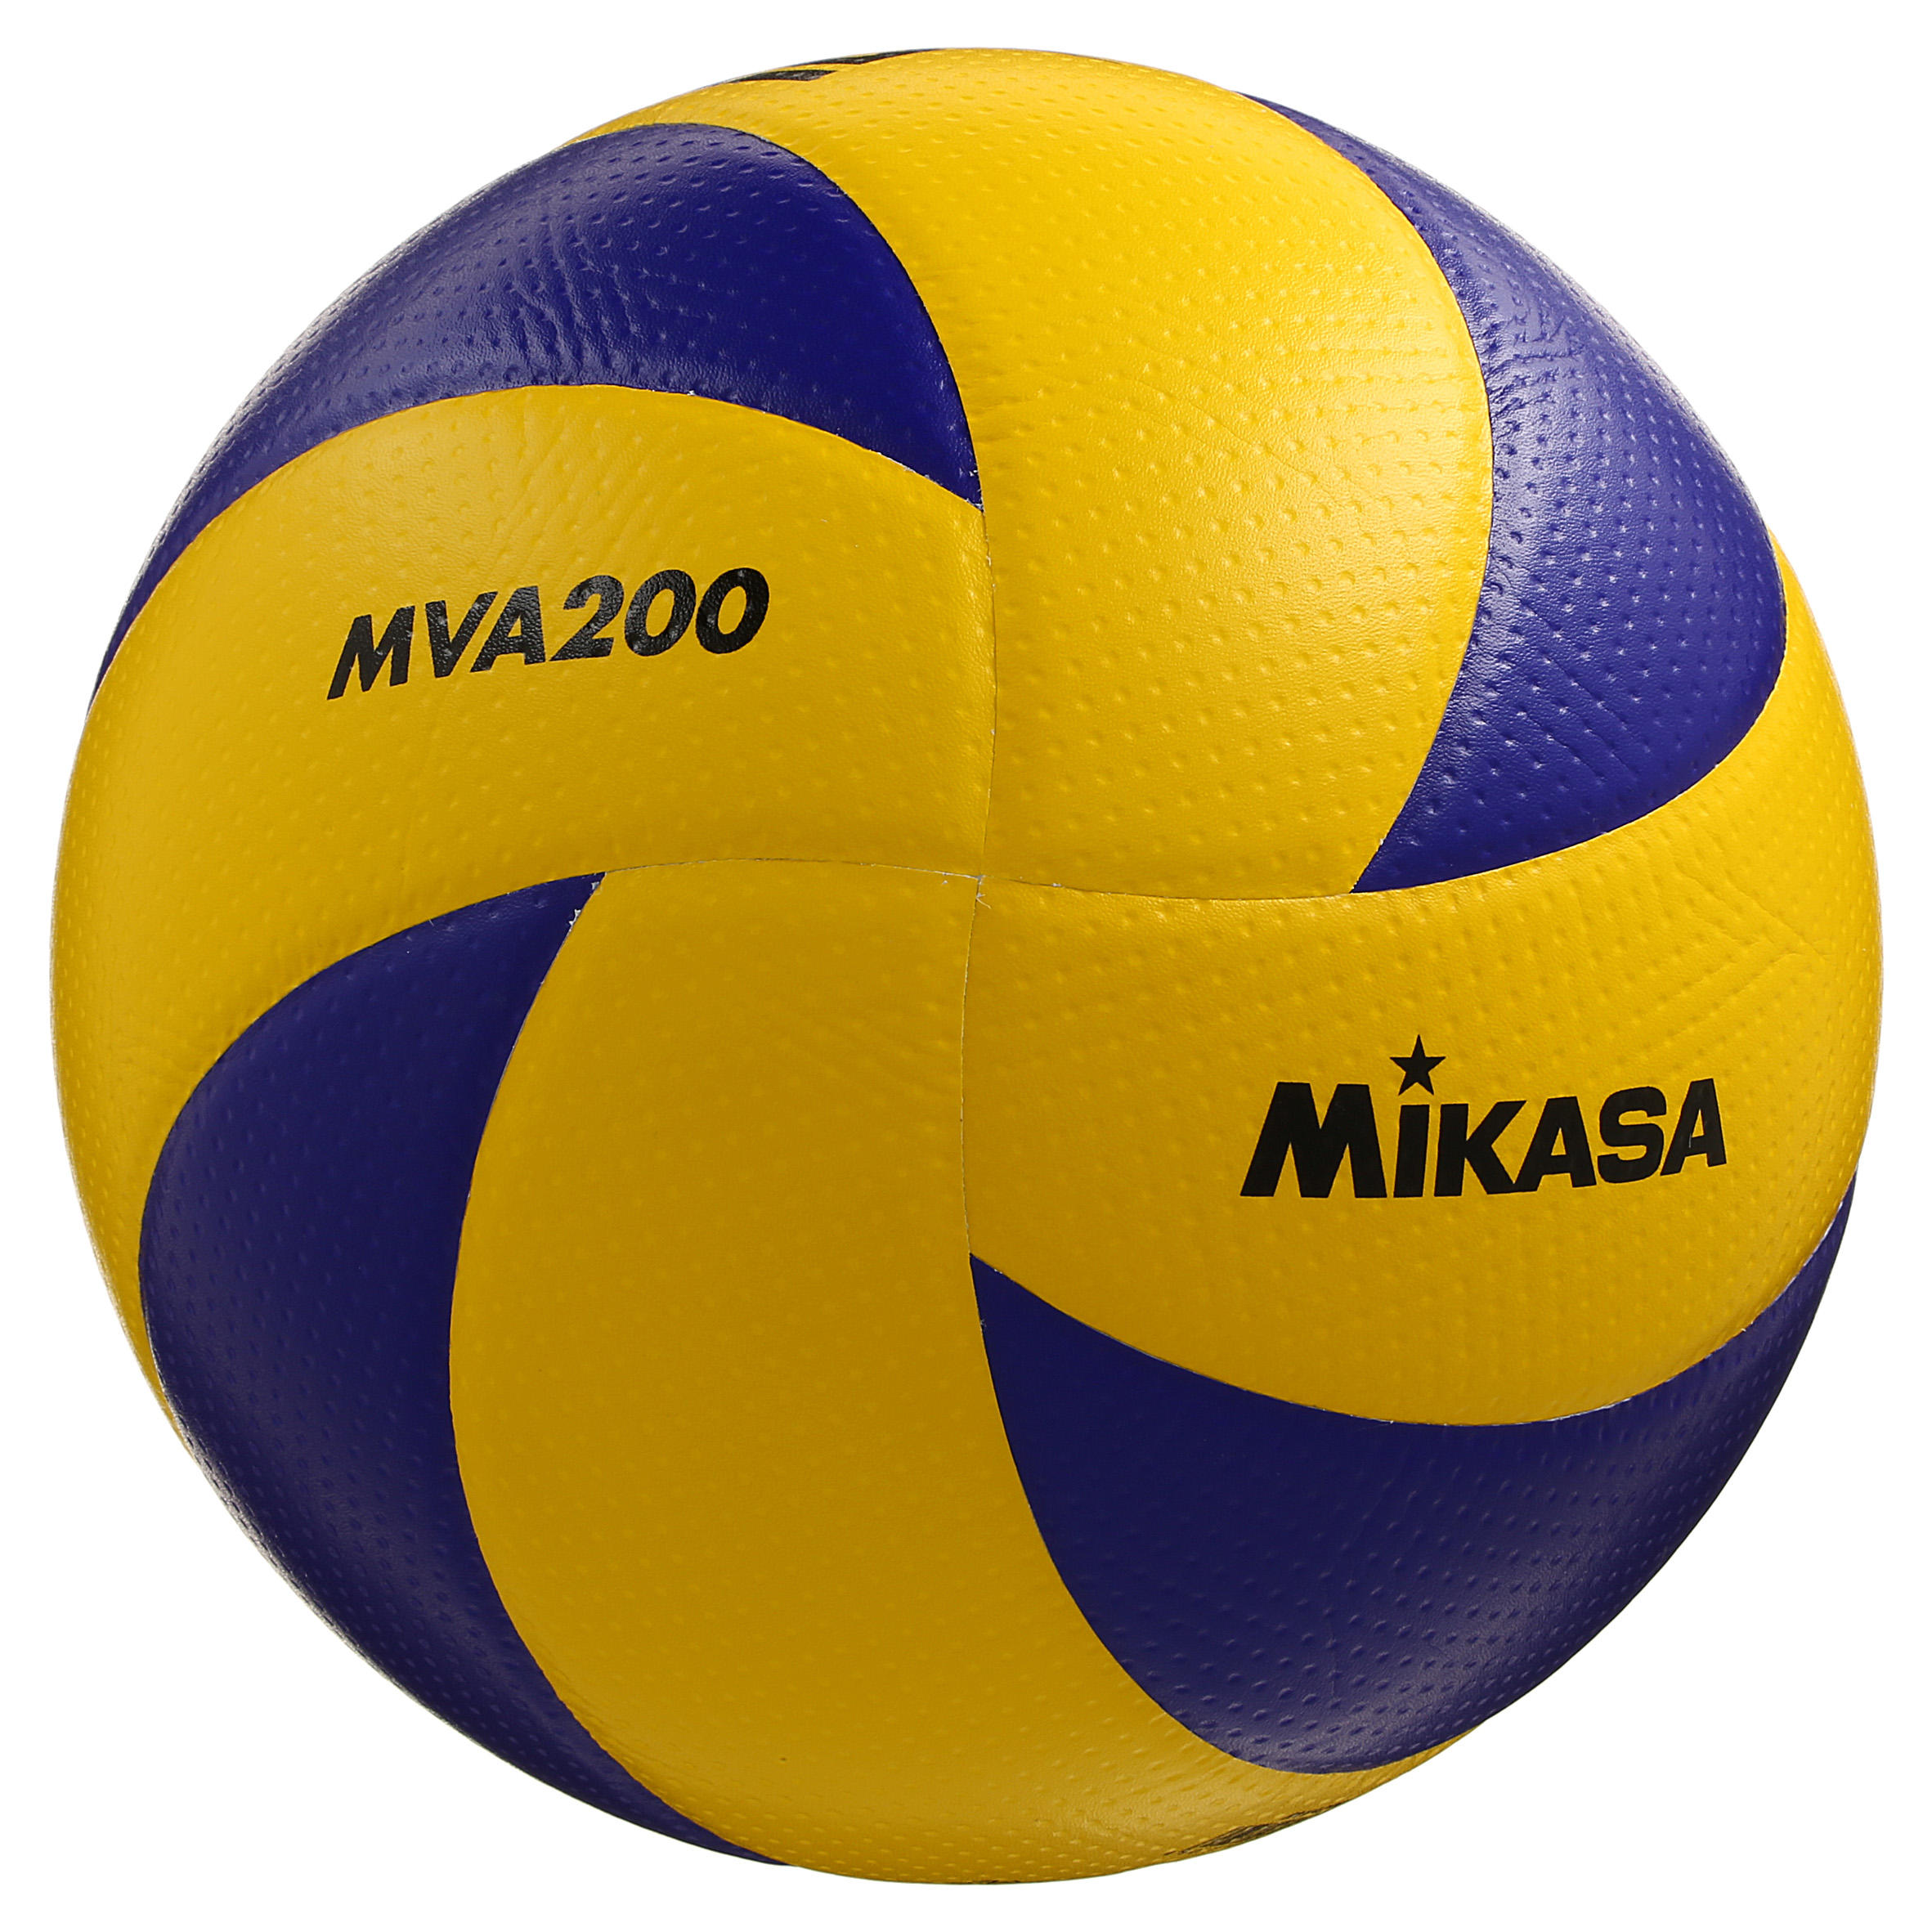 MIKASA MVA 200 Volleyball - Yellow Blue